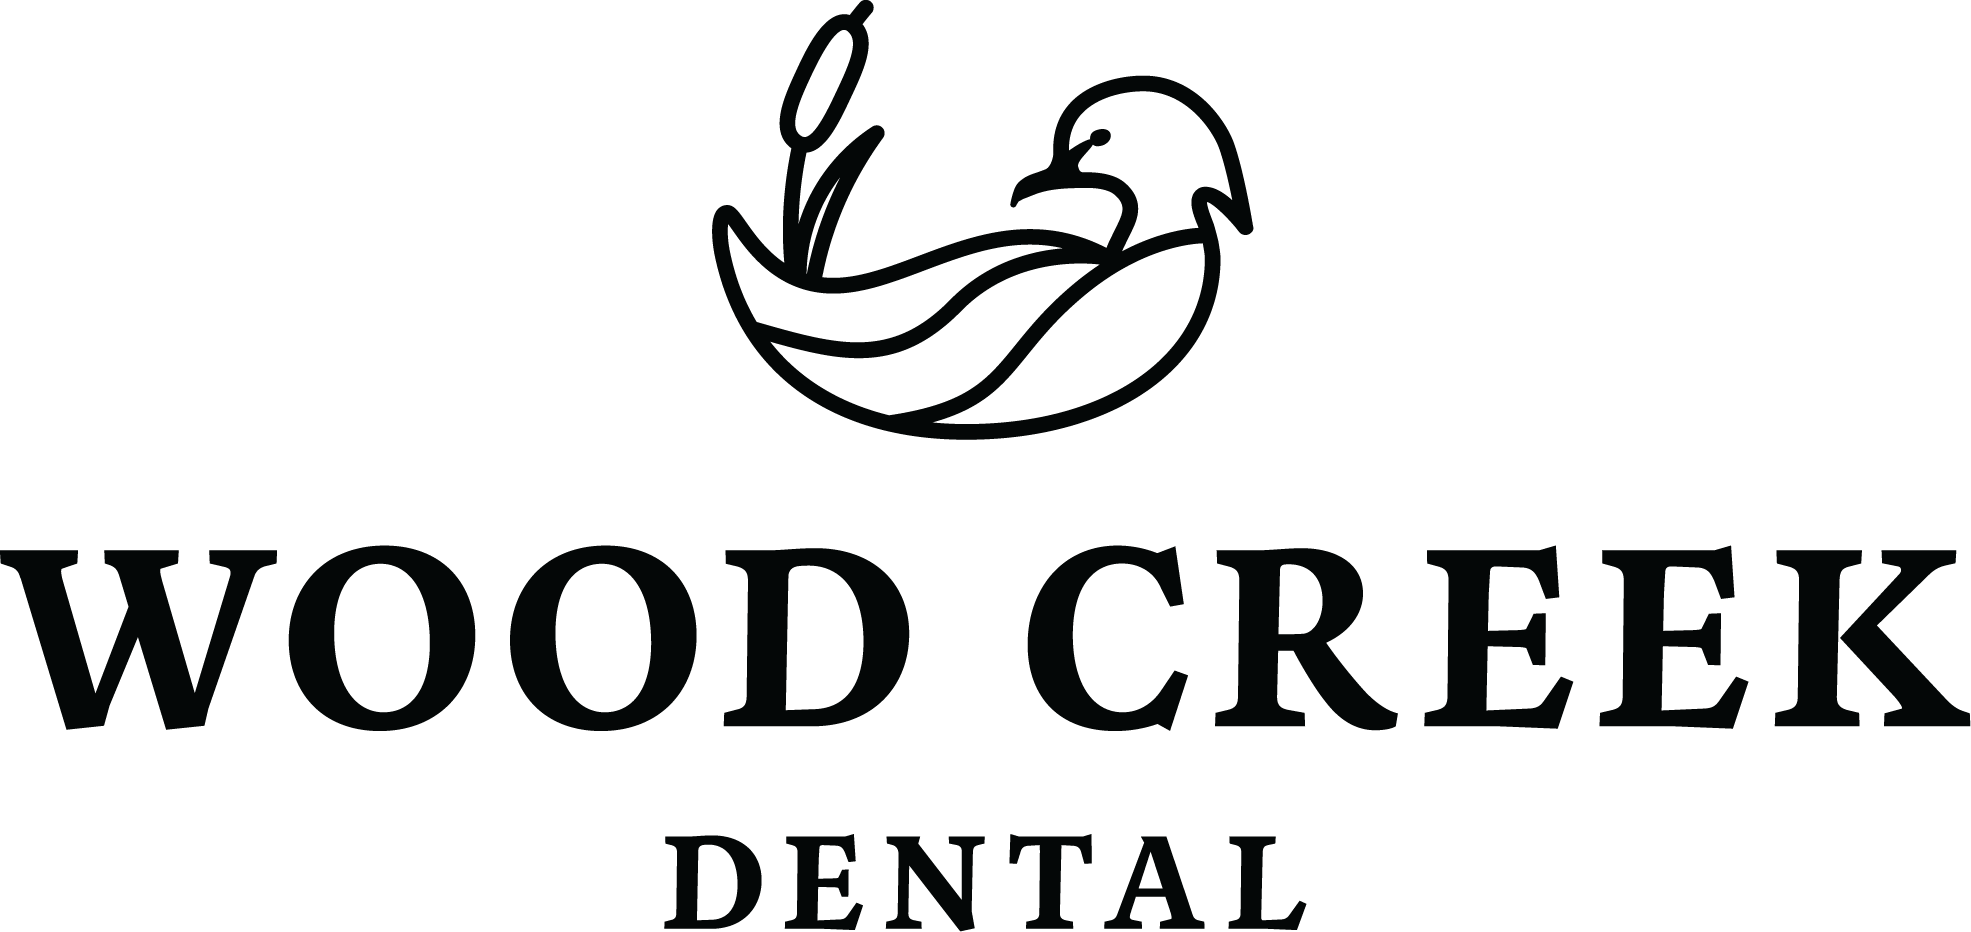 Woodcreek Dental is a proud sponsor of World Upside Down Arts Studio's Beauty and the Beast Jr. show